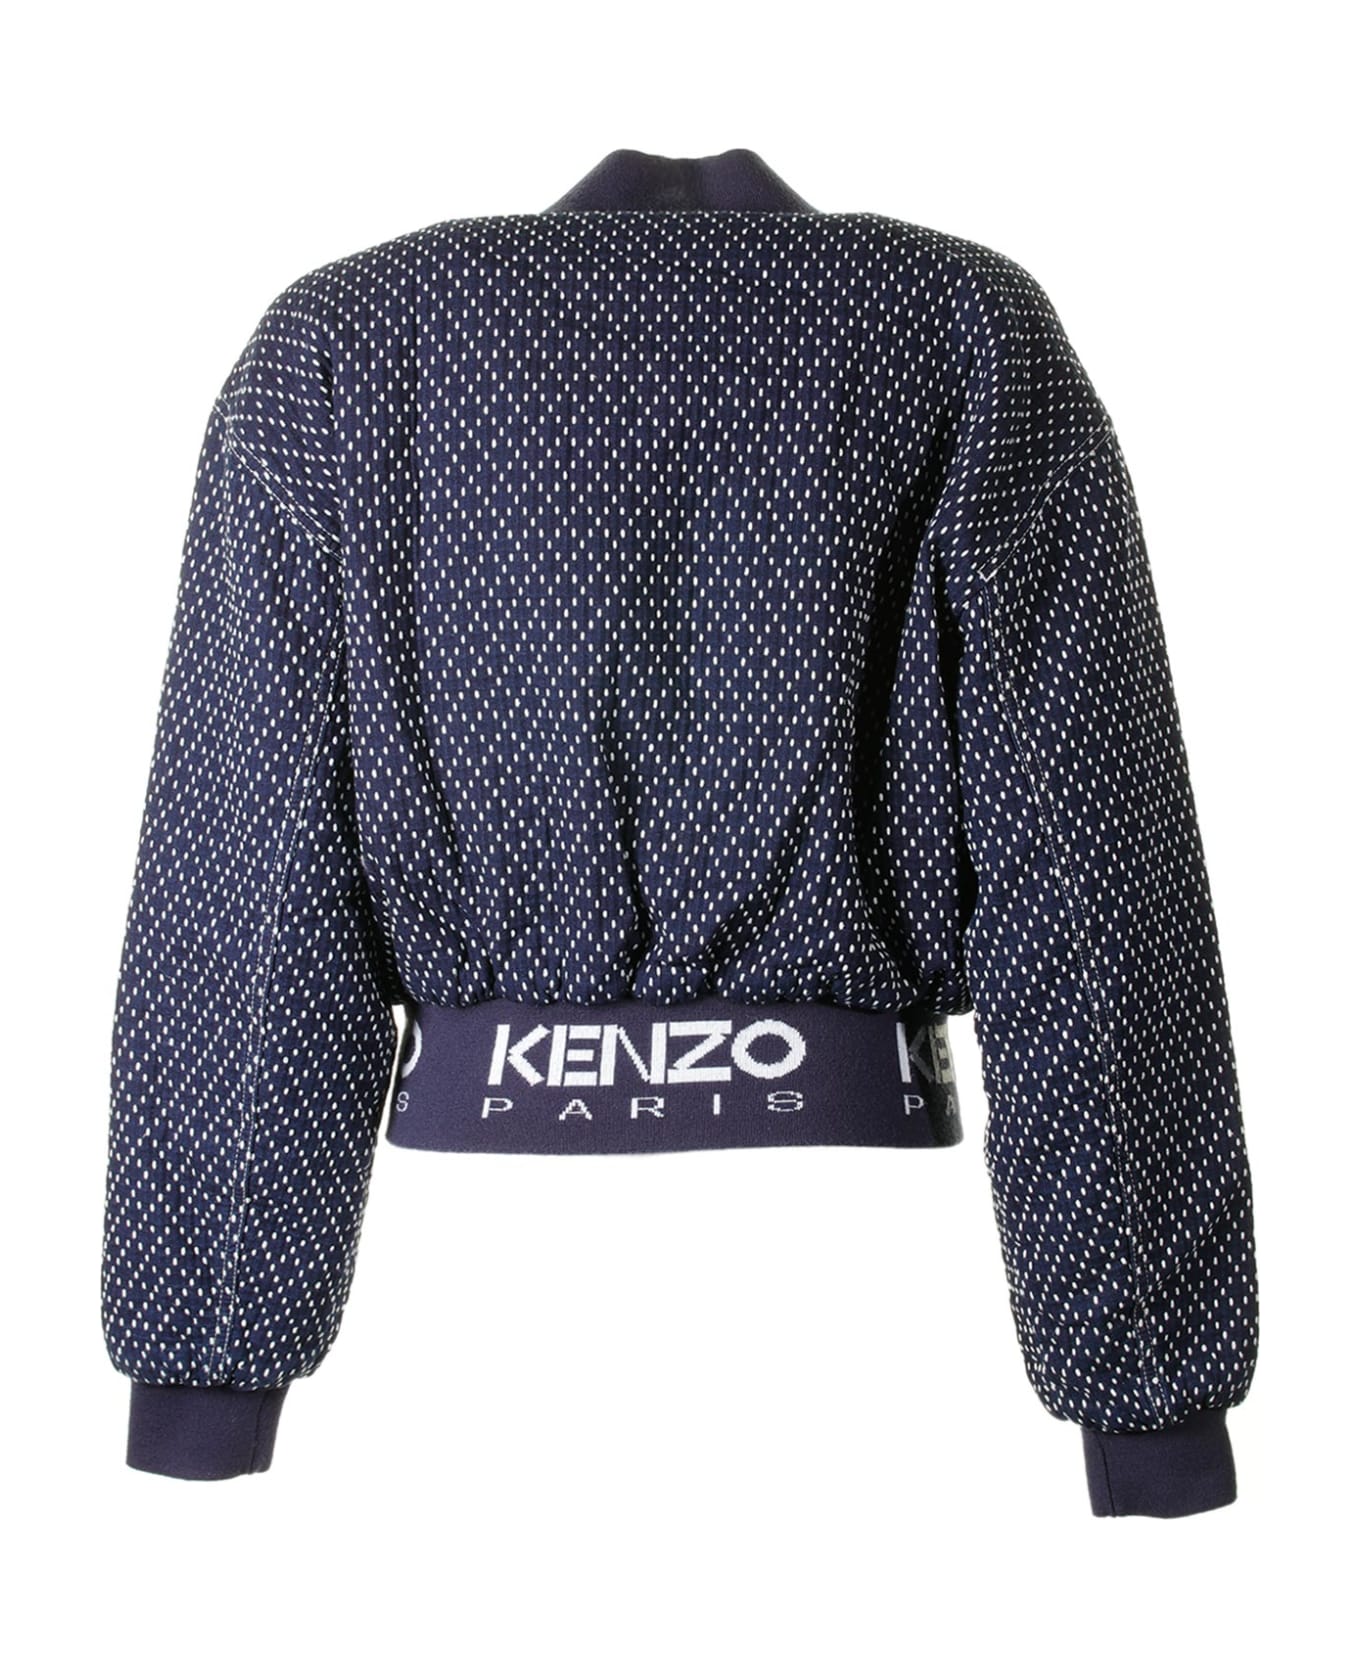 Kenzo Down Jacket - MIDNIGHT BLUE